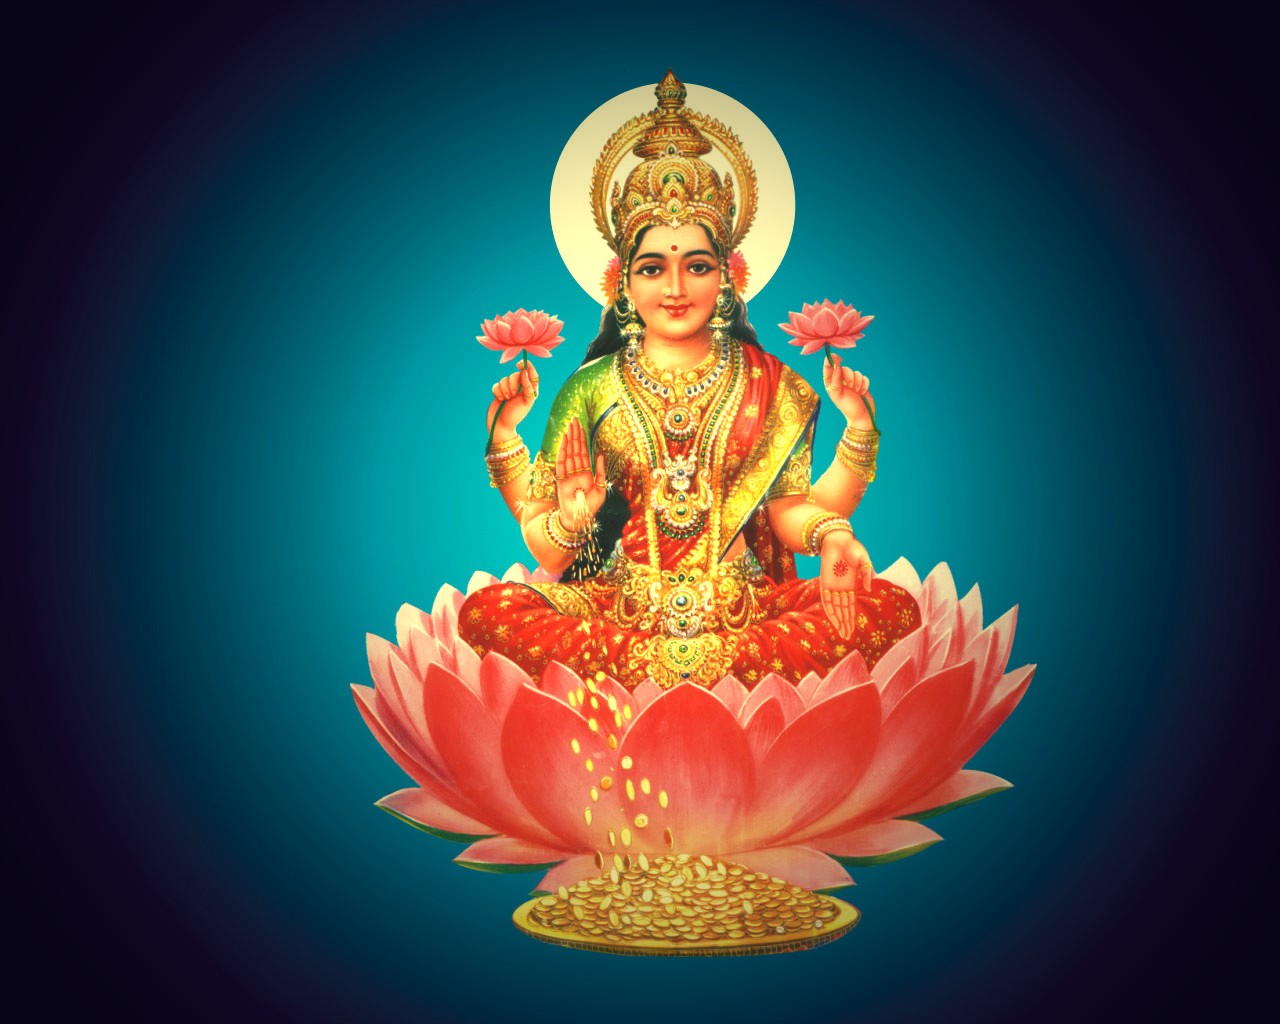 50+] Hindu God Wallpaper - WallpaperSafari